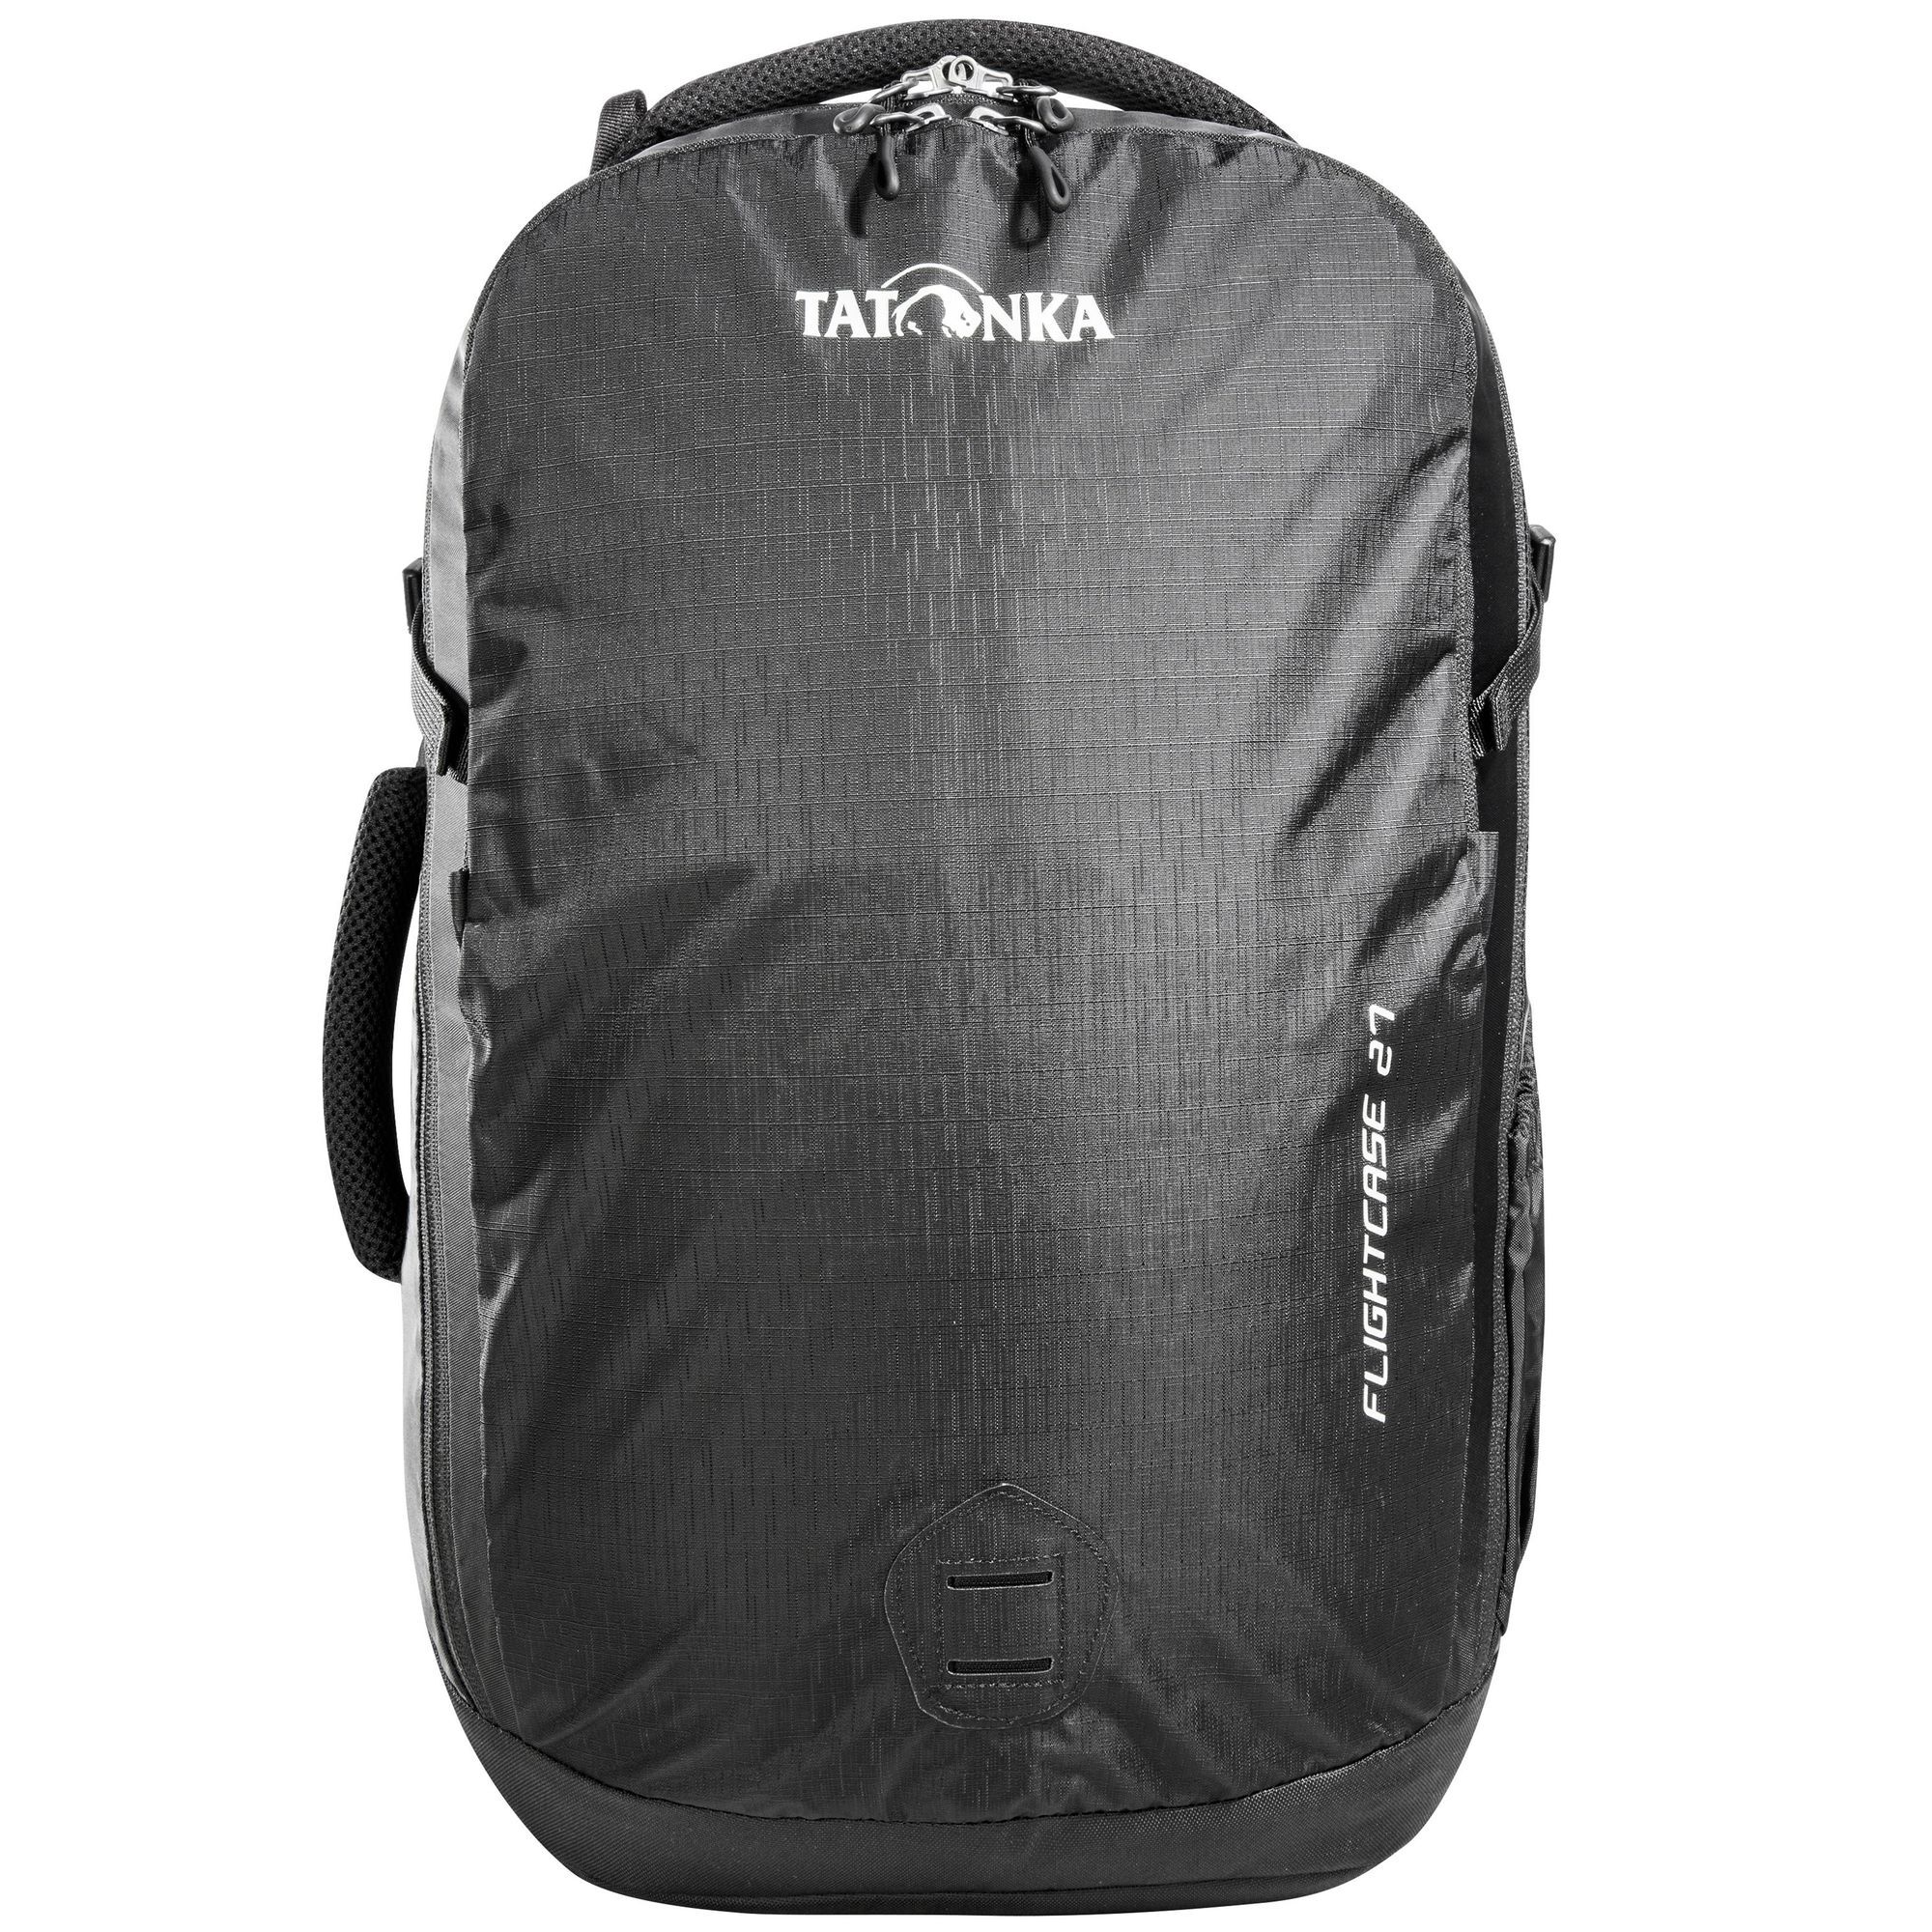 Рюкзак Tatonka Flightcase 27 50 cm Laptopfach, черный рюкзак tatonka city rolltop 50 cm laptopfach черный